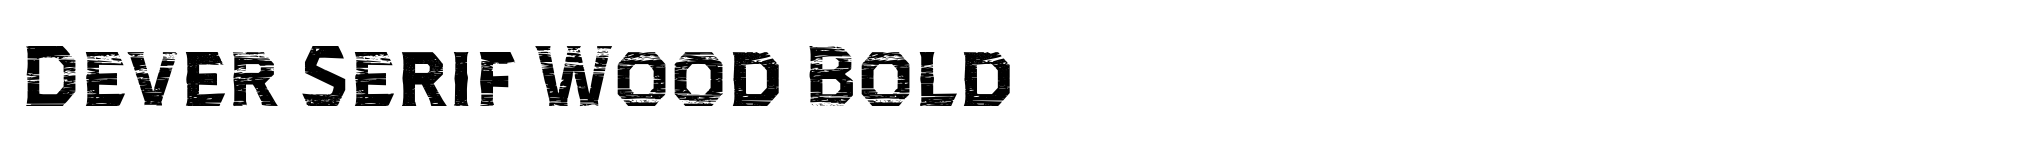 Dever Serif Wood Bold image